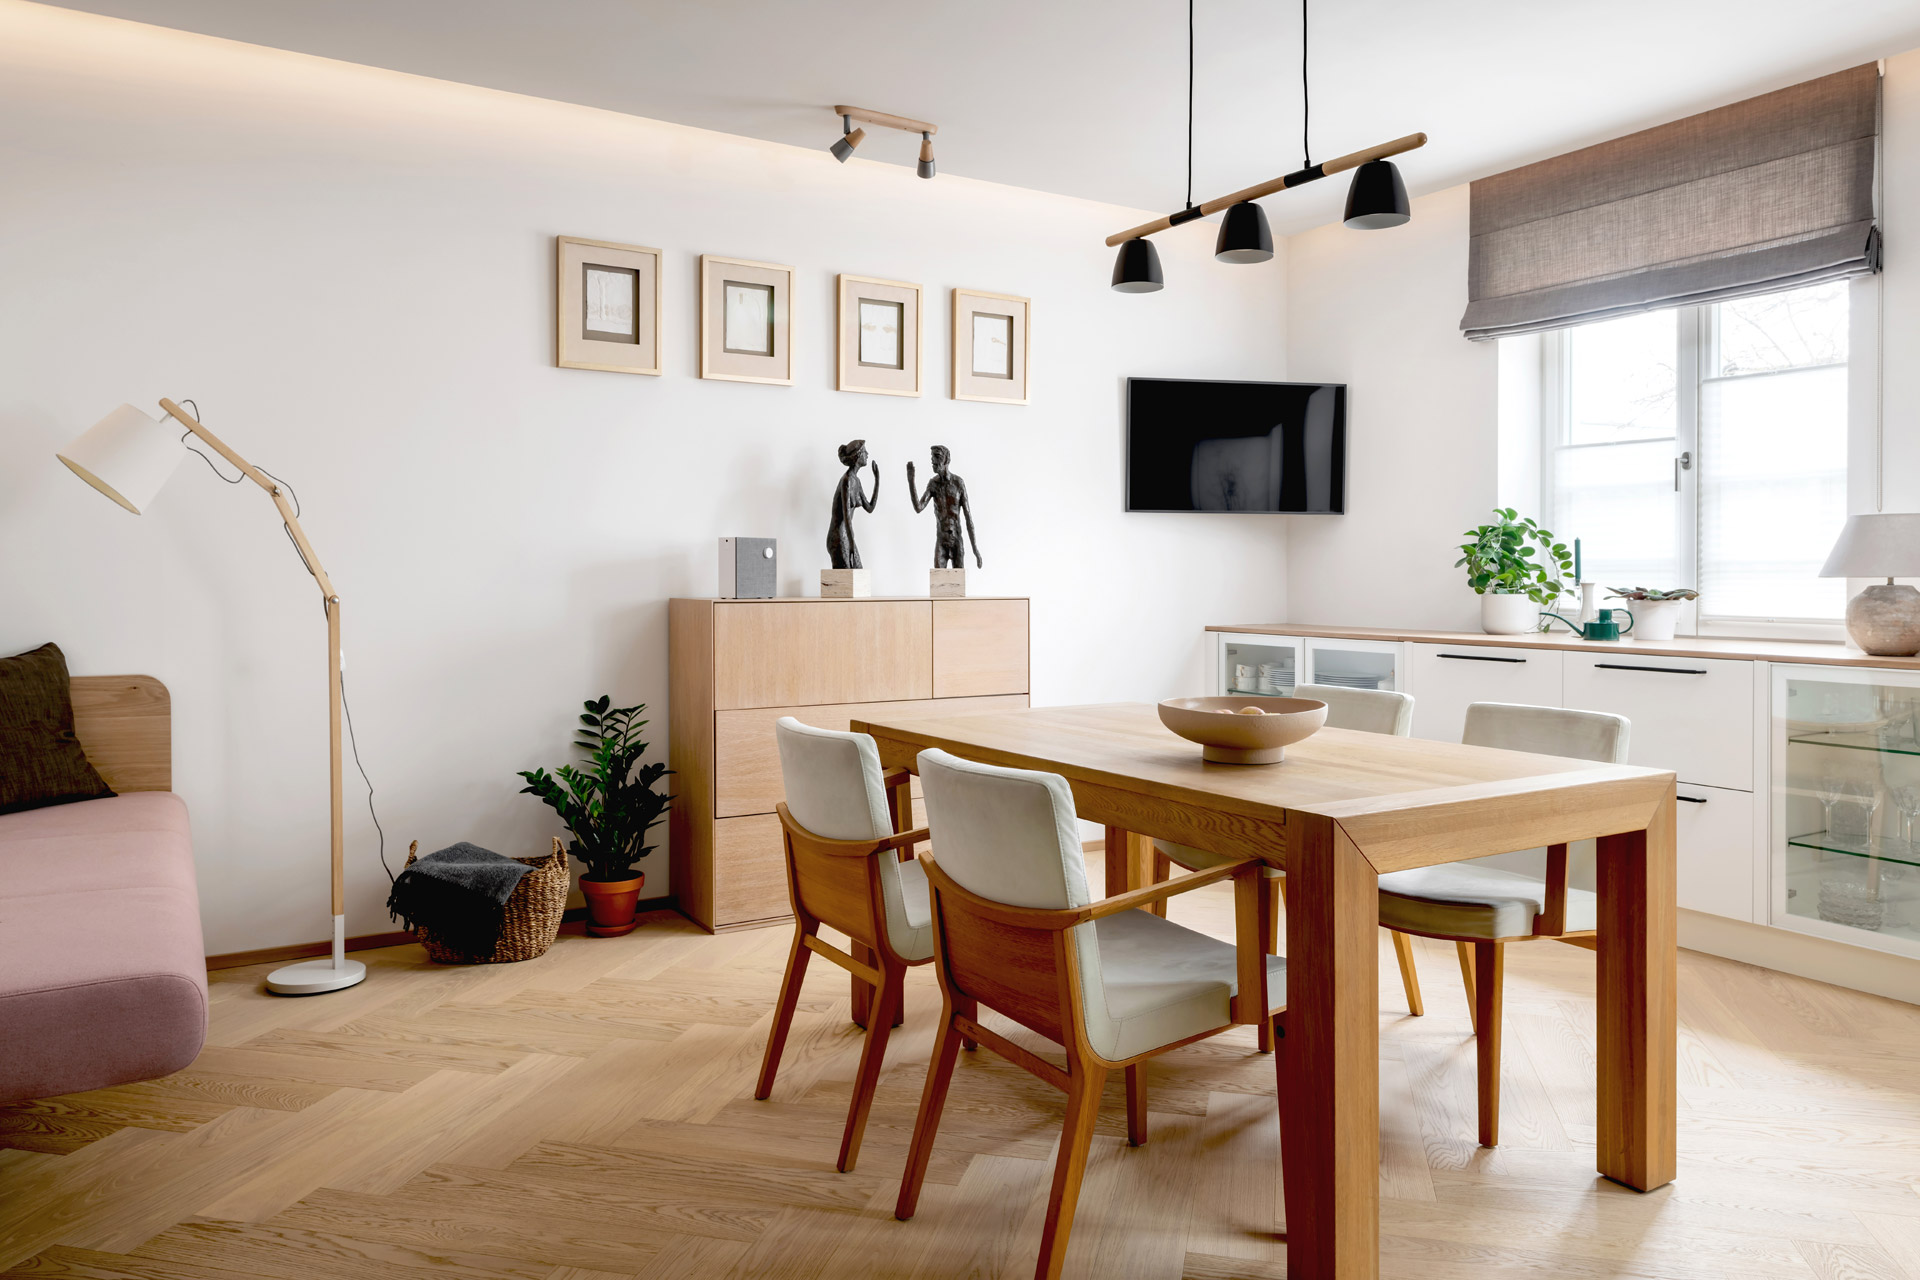 Hanák Furniture Customized interior Rounded elements